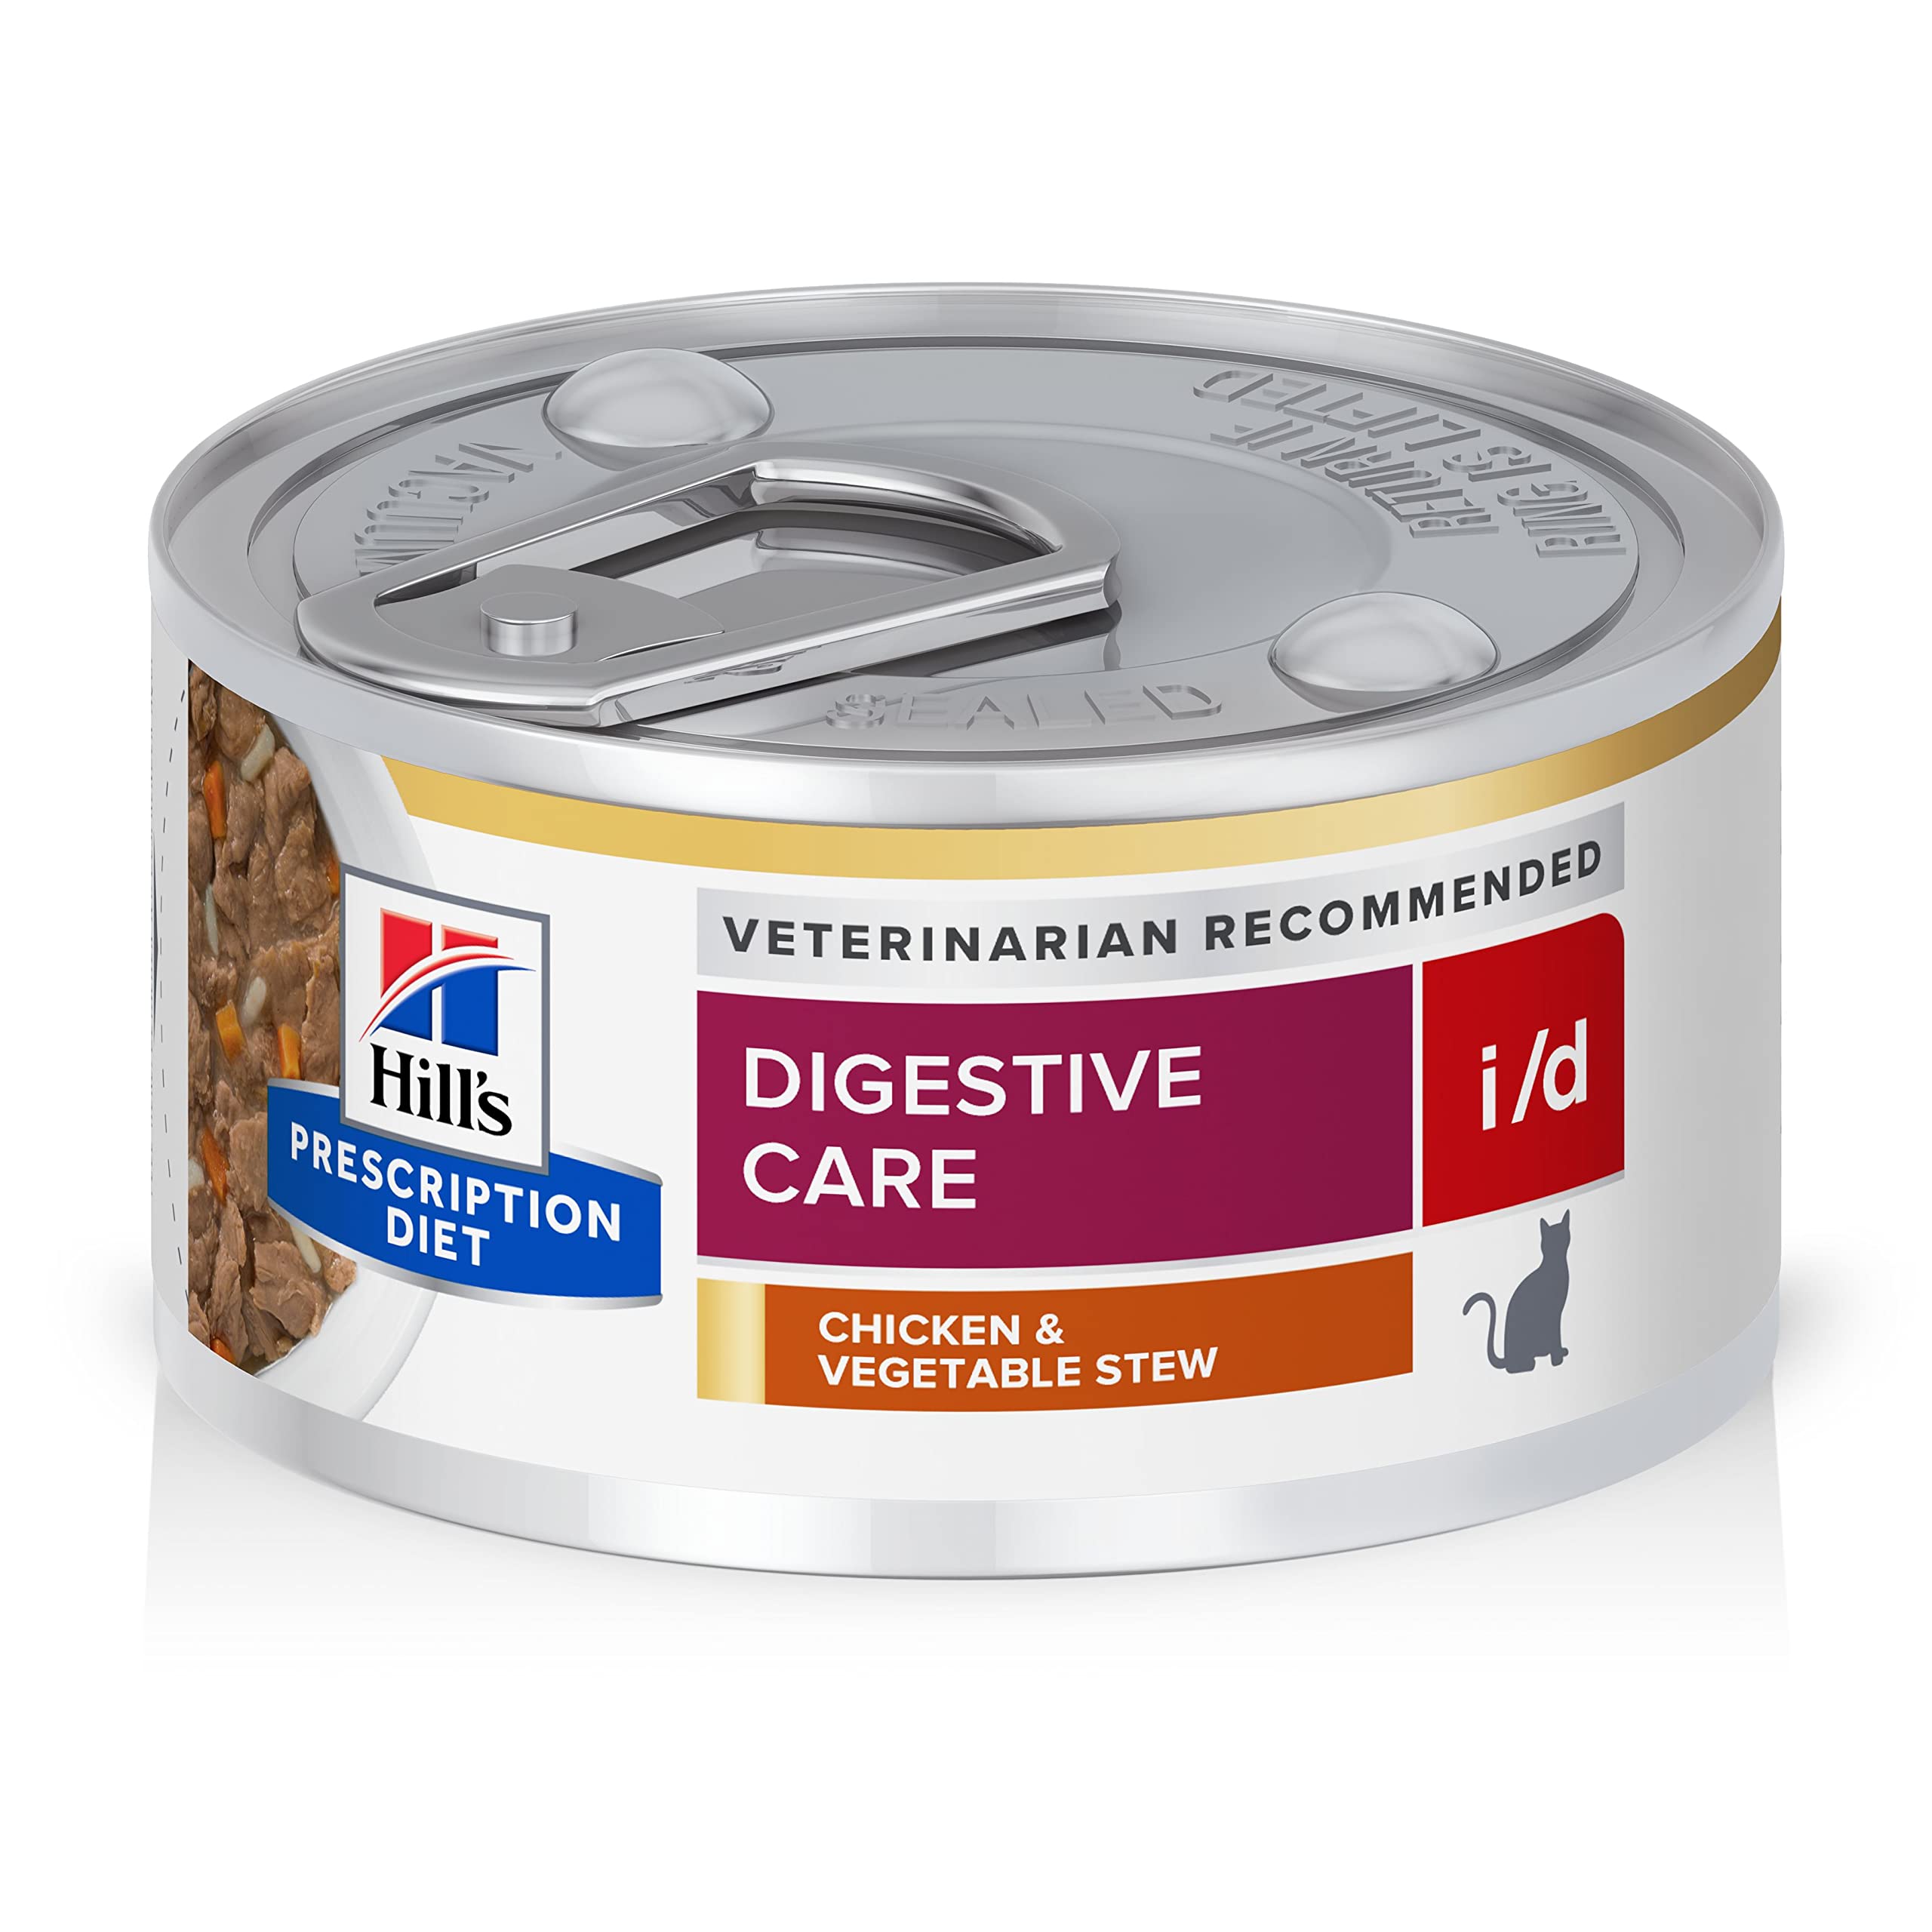 HILL'S PRESCRIPTION DIET i/d Digestive Care Cat Food, Veterinary Diet